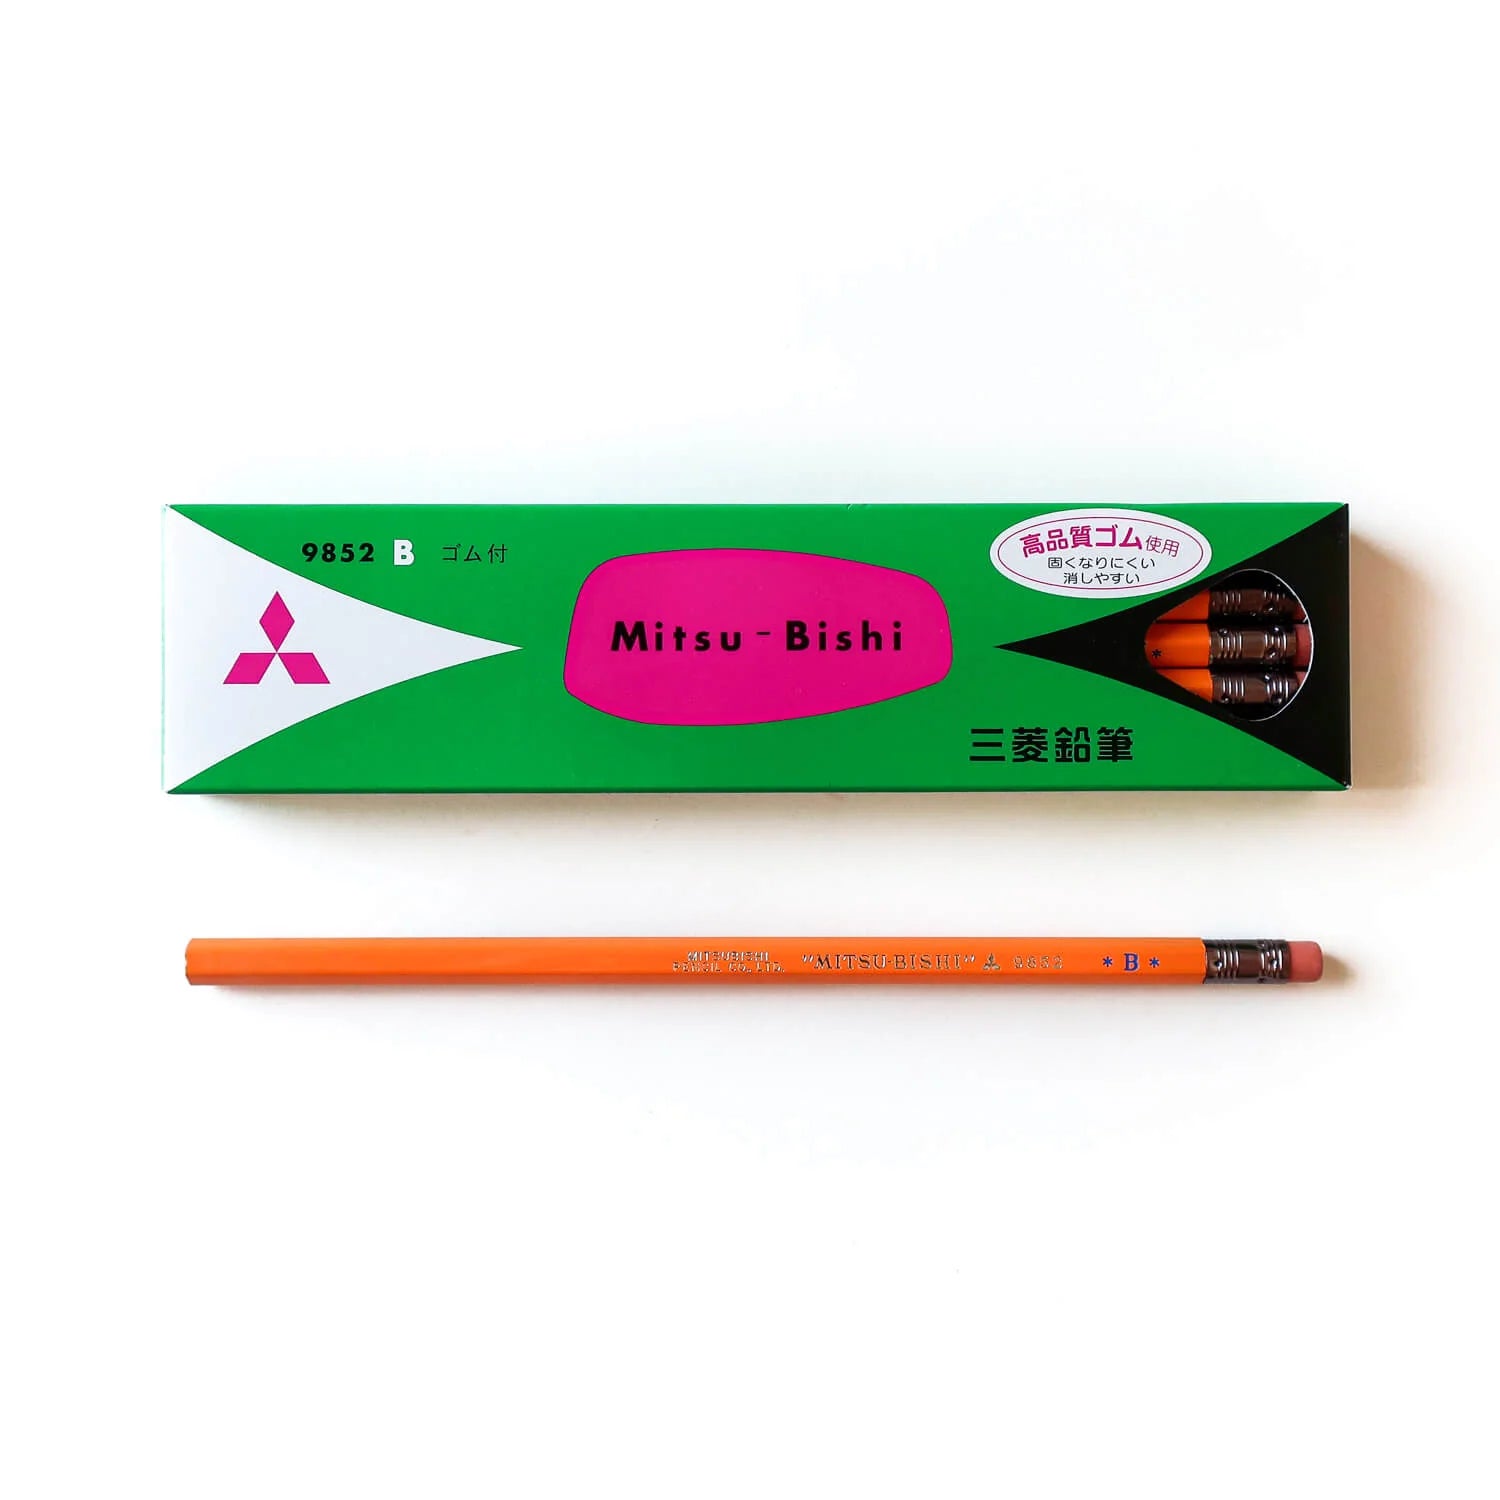 Mitsubishi Pencils (Green Box)